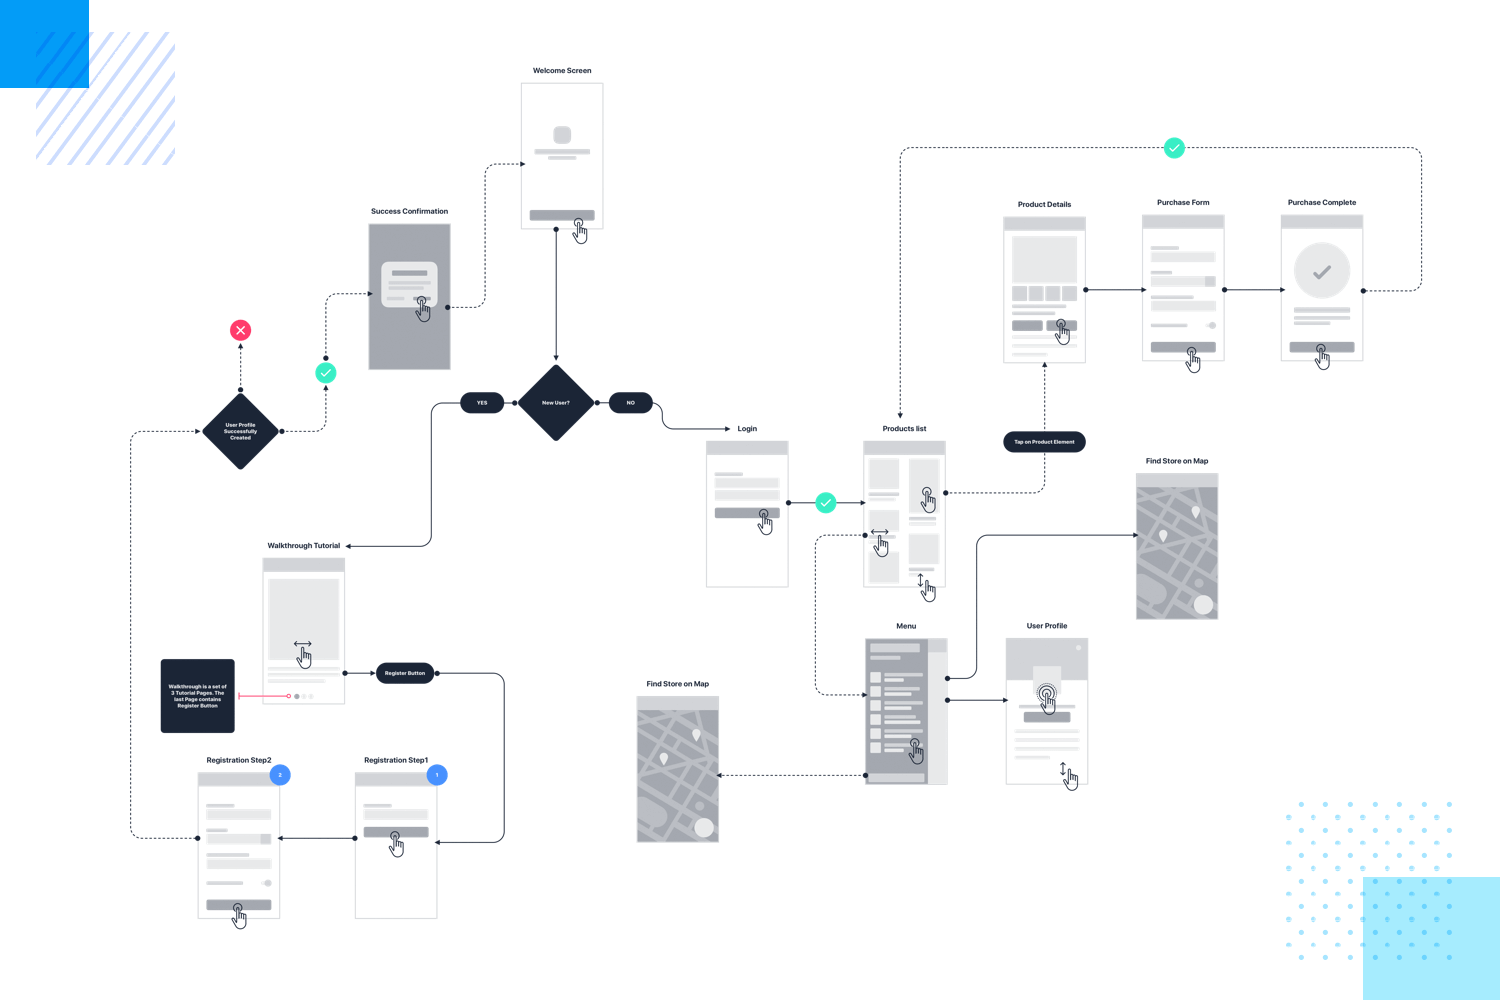 Prototype presentation techniques - bring user flow maps